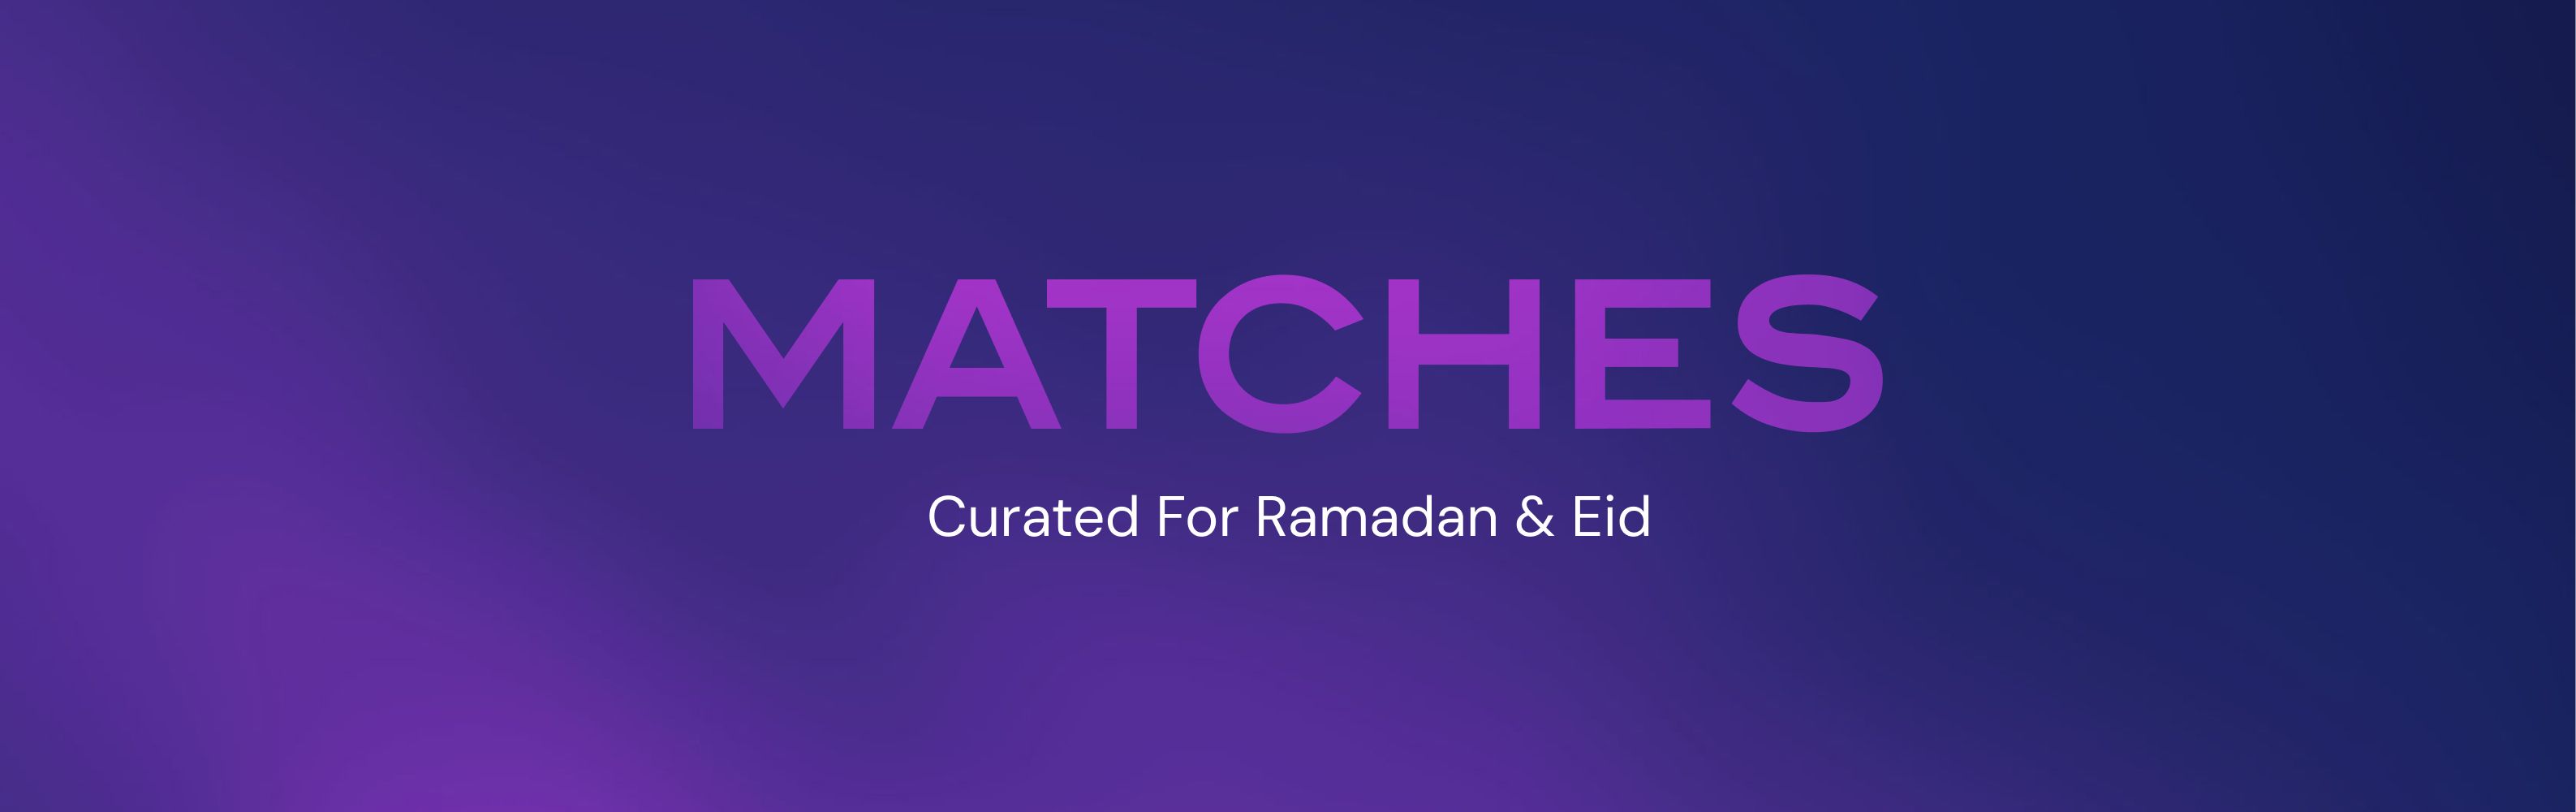 Curated For Ramadan & Eid